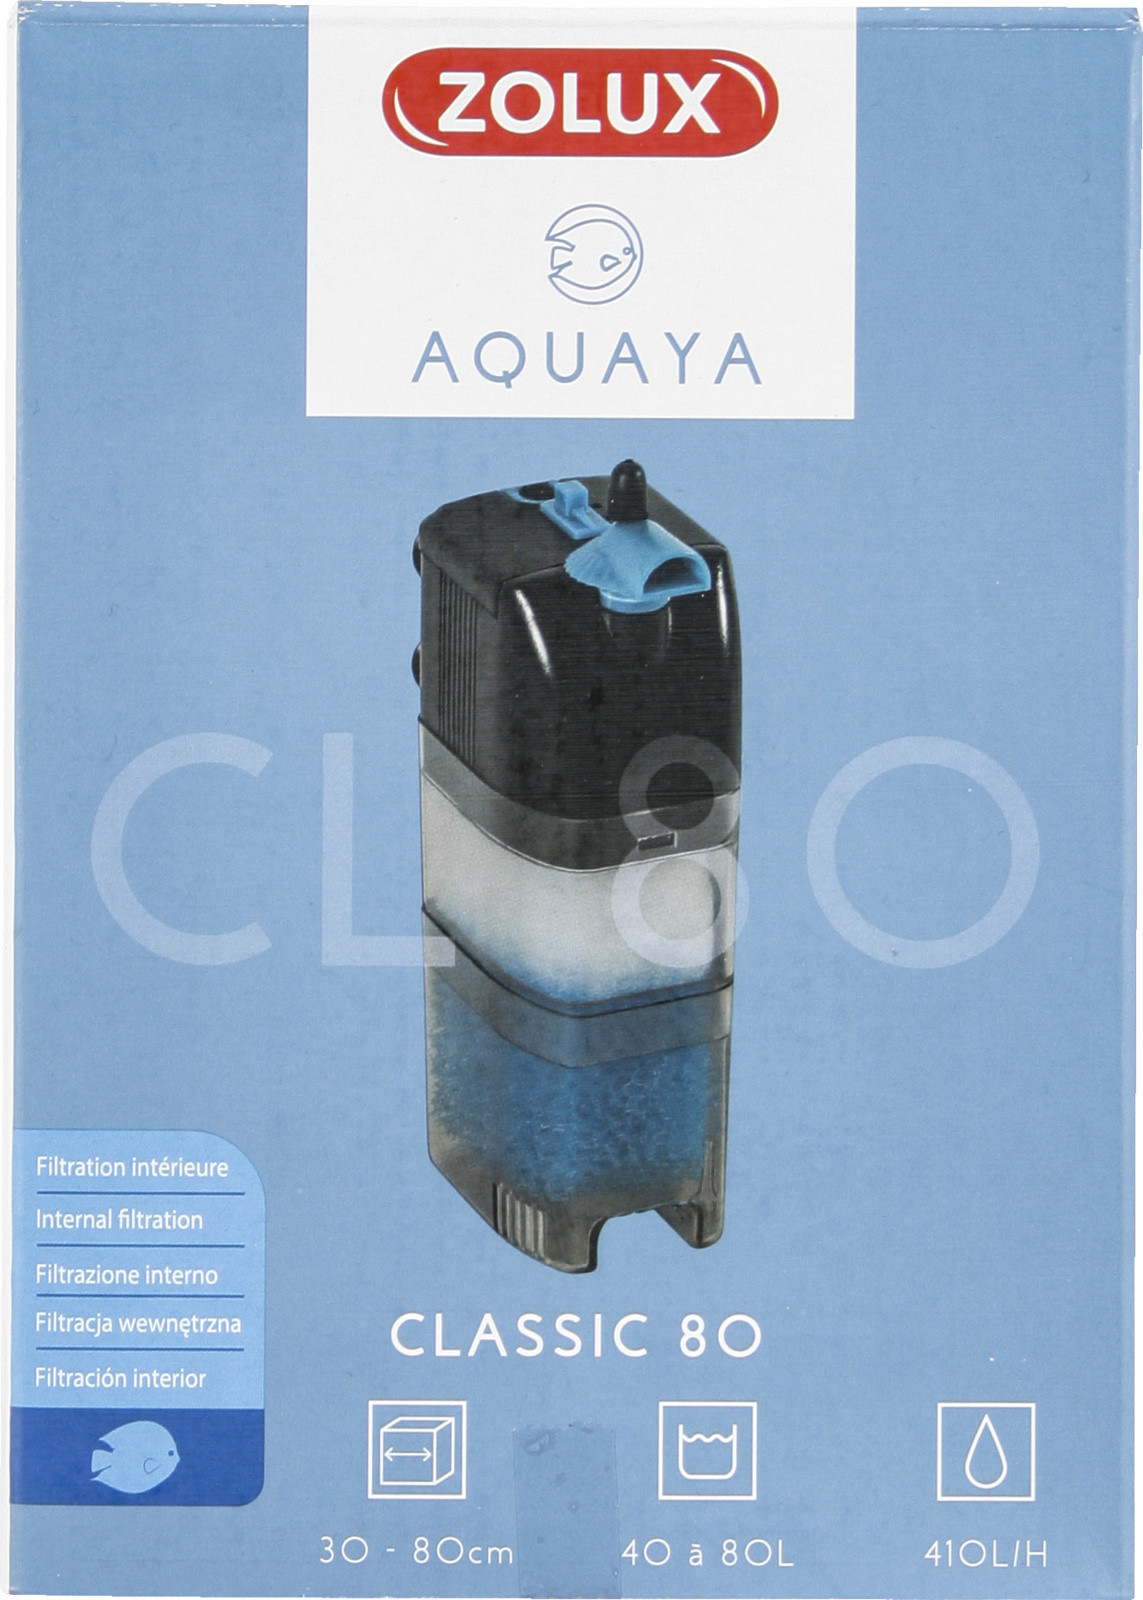 Zolux AQUAYA Filtr Classic 80 326526